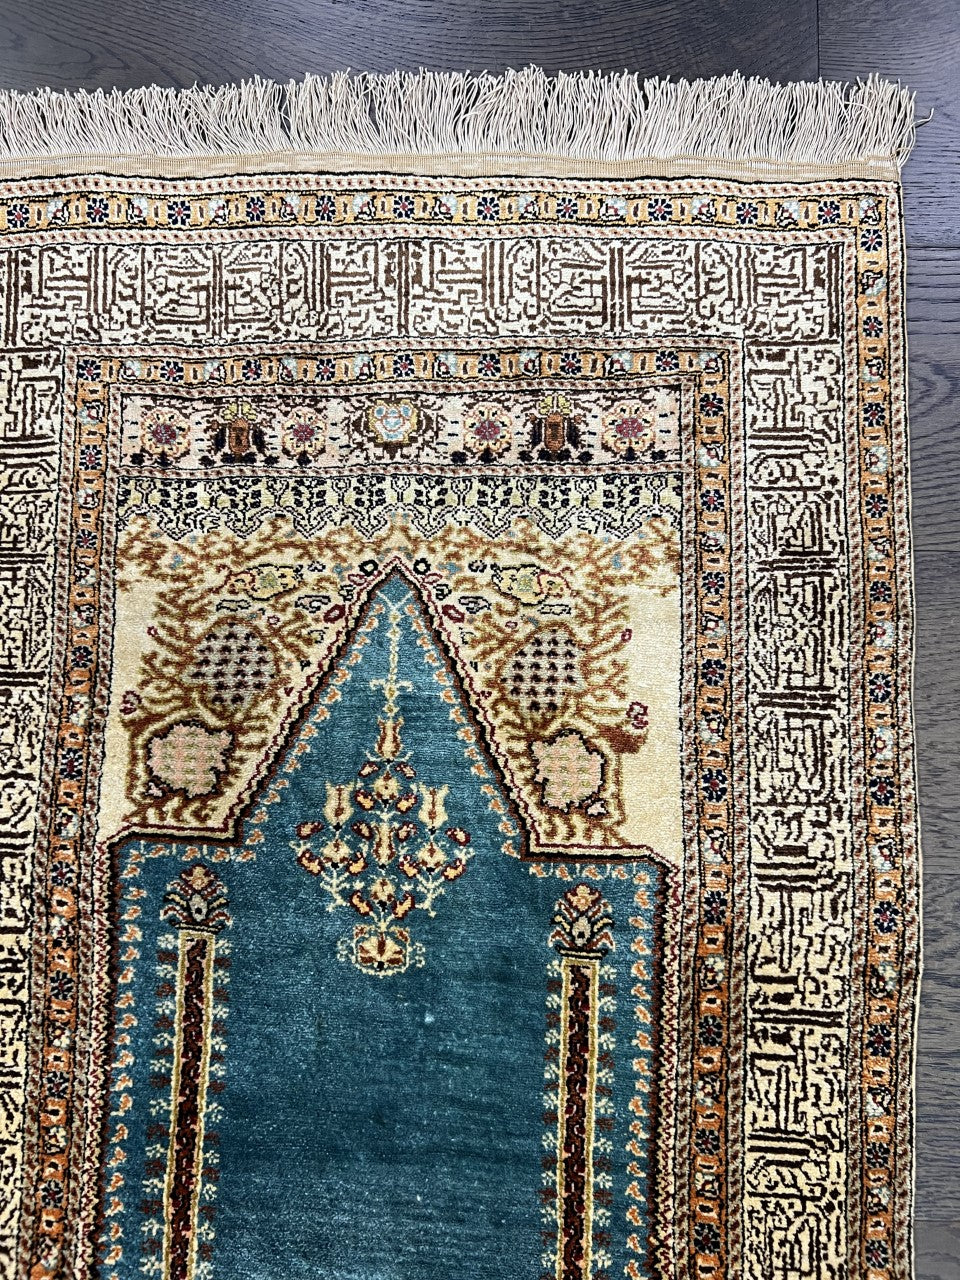 Wonderful old decorative Turkish Kaisary silk rug